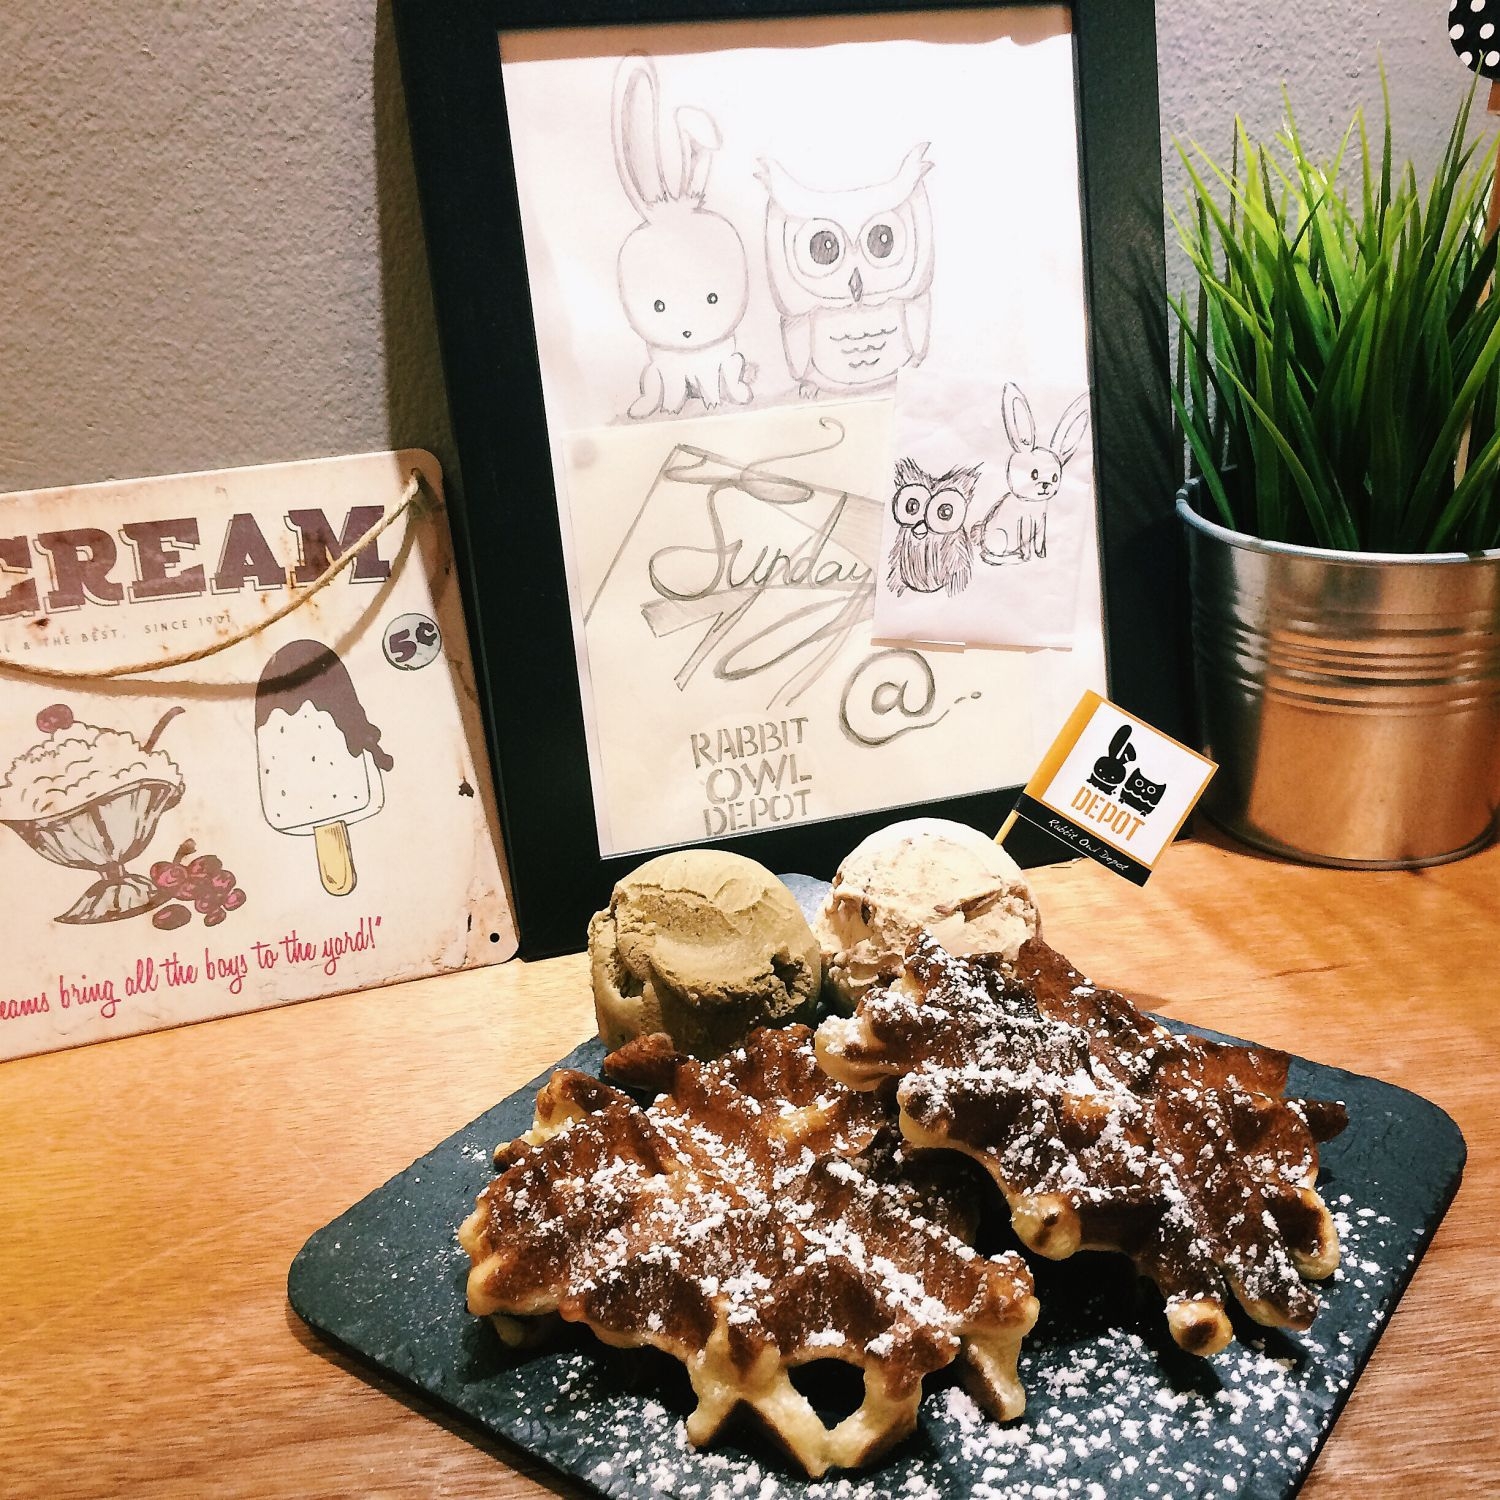 Snowflake Waffle with Ice Cream - Rabbit Owl Depot